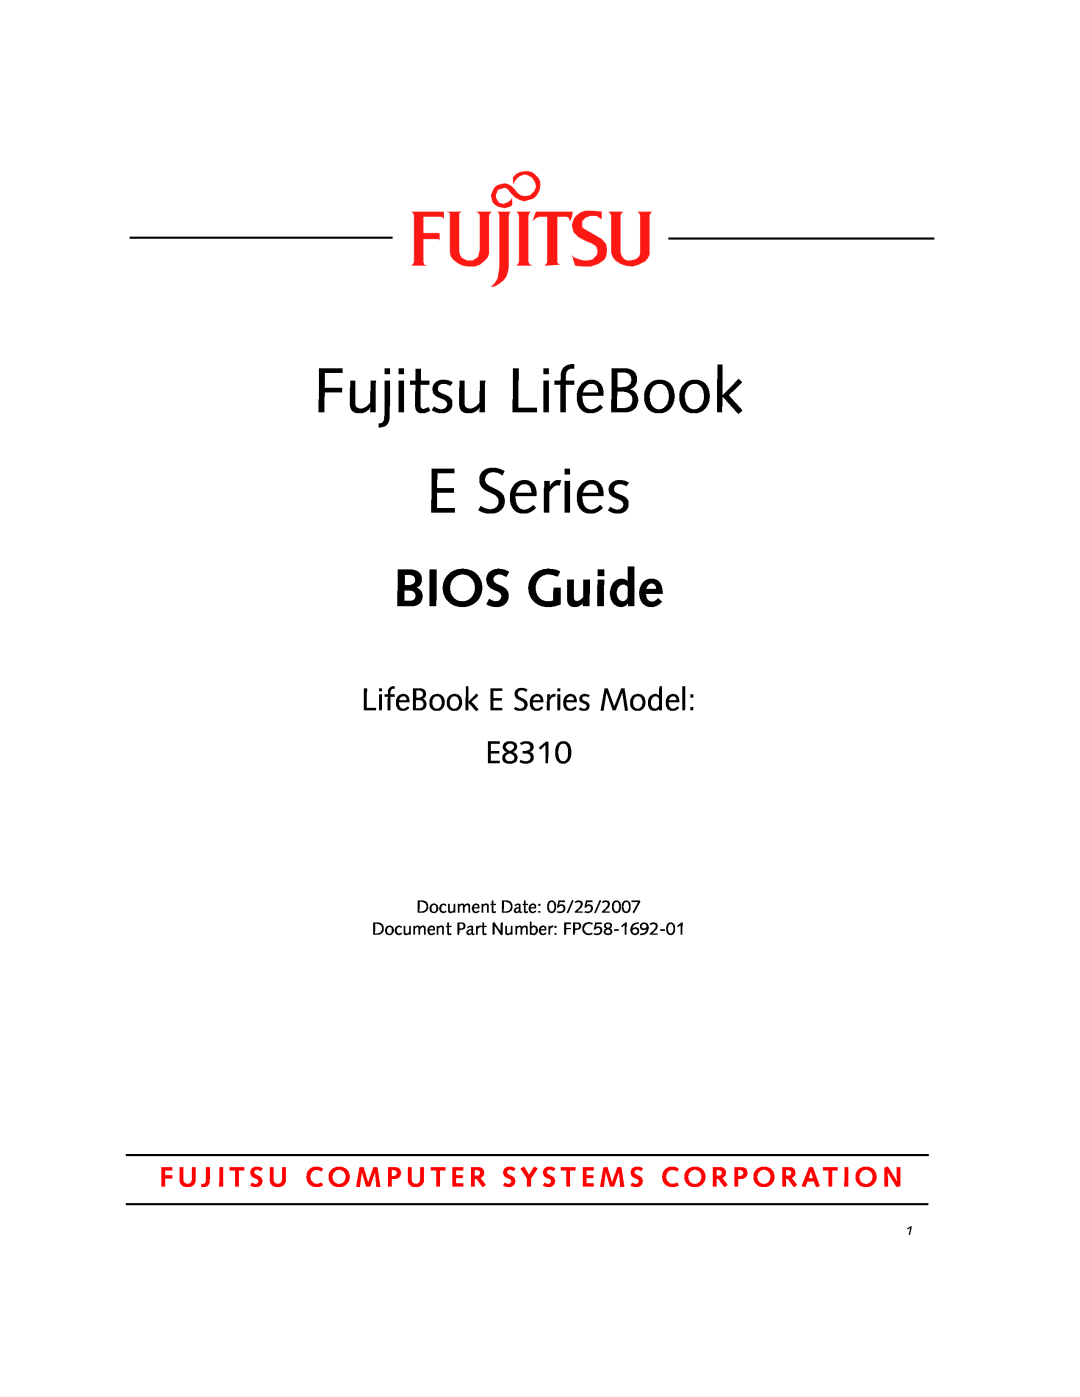 Fujitsu Siemens Computers manual Fujitsu LifeBook E Series, BIOS Guide, LifeBook E Series Model E8310 